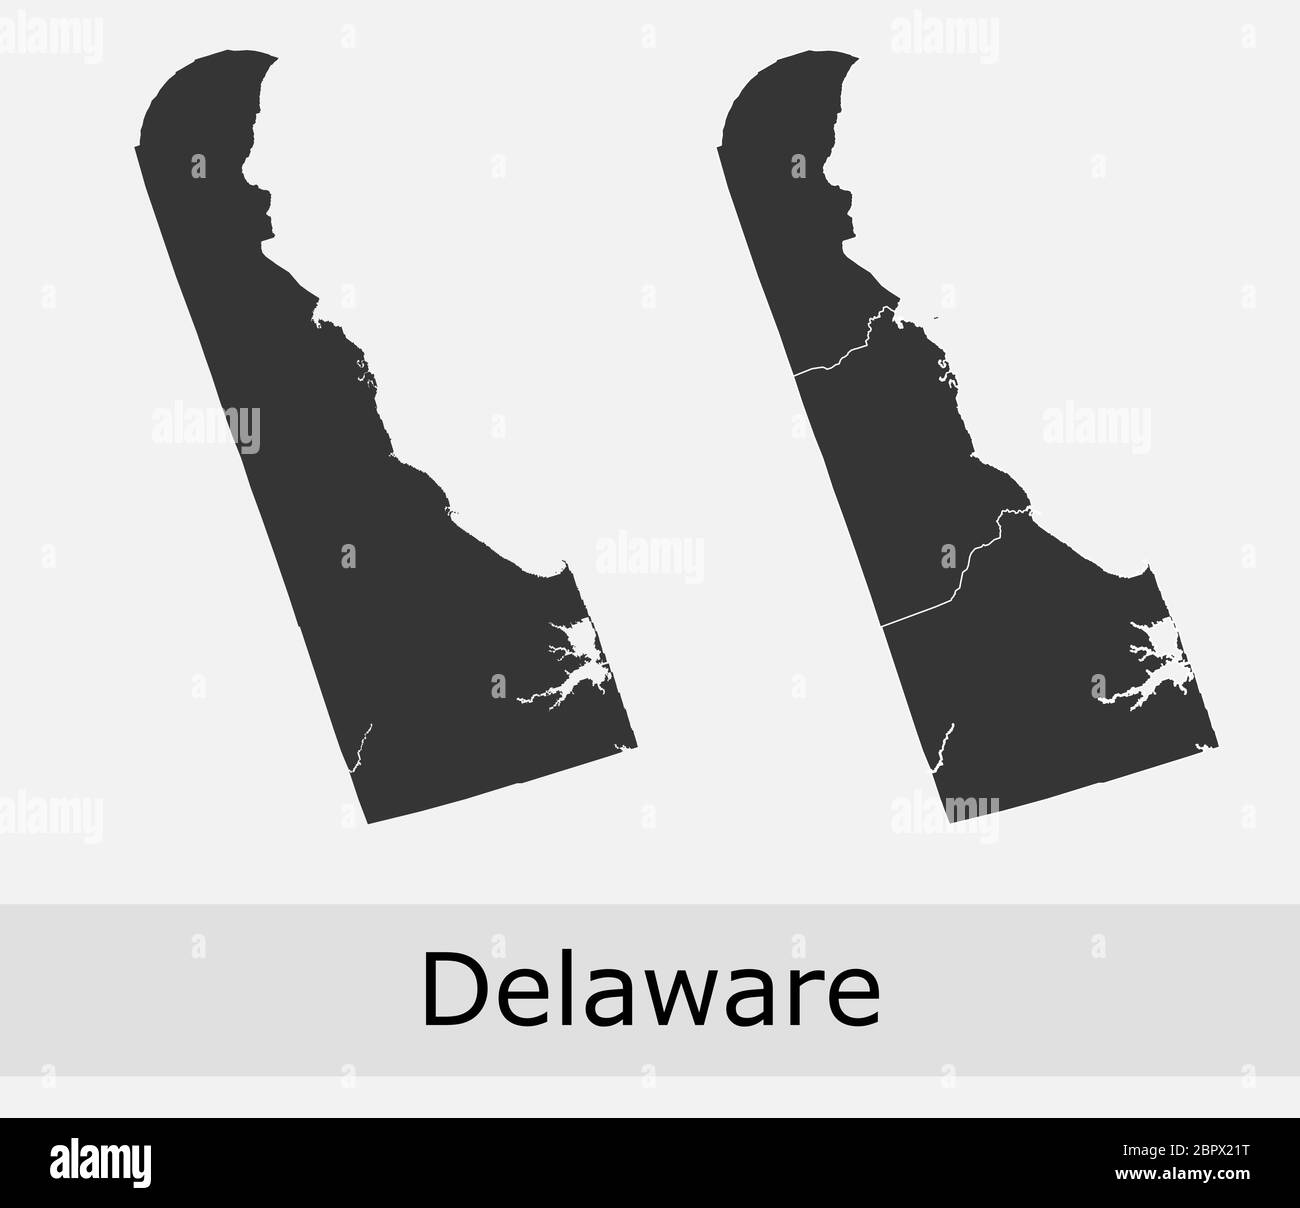 Delaware Karten Vektor skizzieren Grafschaften, Townships, Regionen, Gemeinden, Departements, Grenzen Stock Vektor